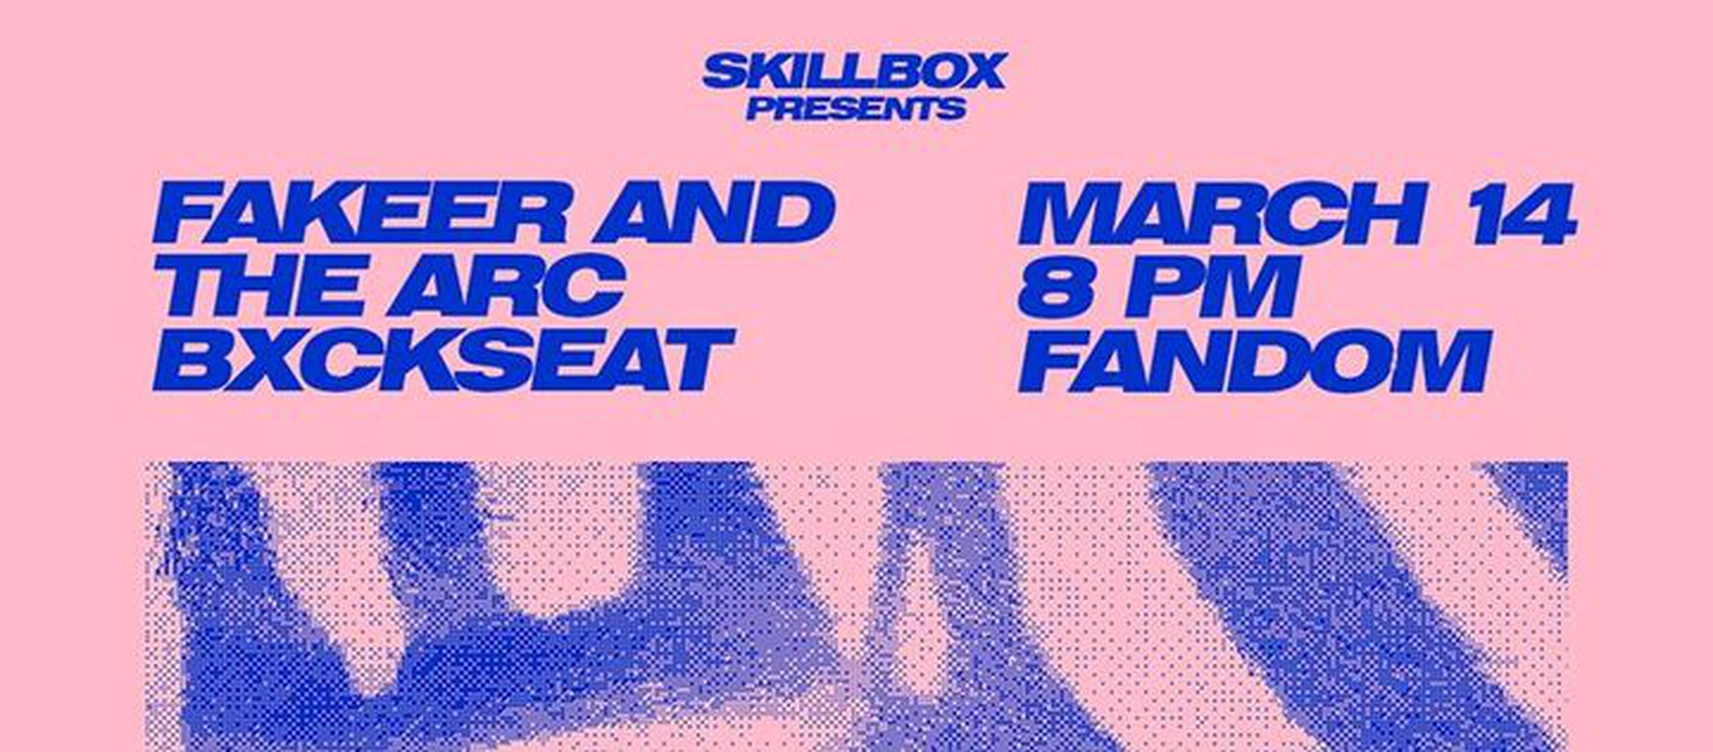 SkillBox presents Fakeer & The Arc + Bxckseat